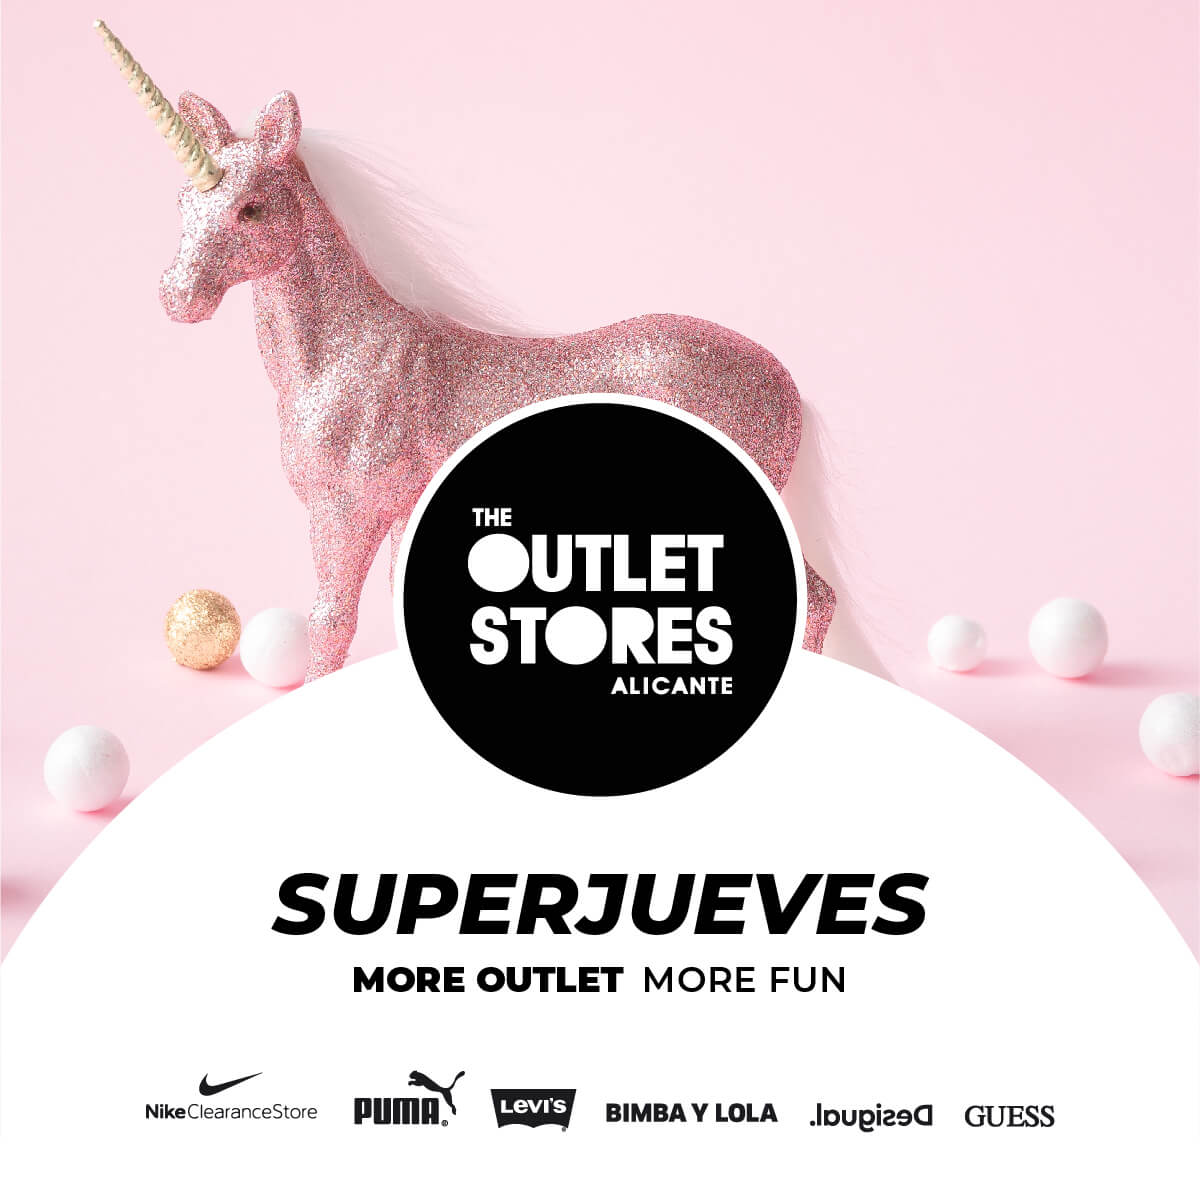 SUPERJUEVES - Centro Comercial Outlet Stores Alicante